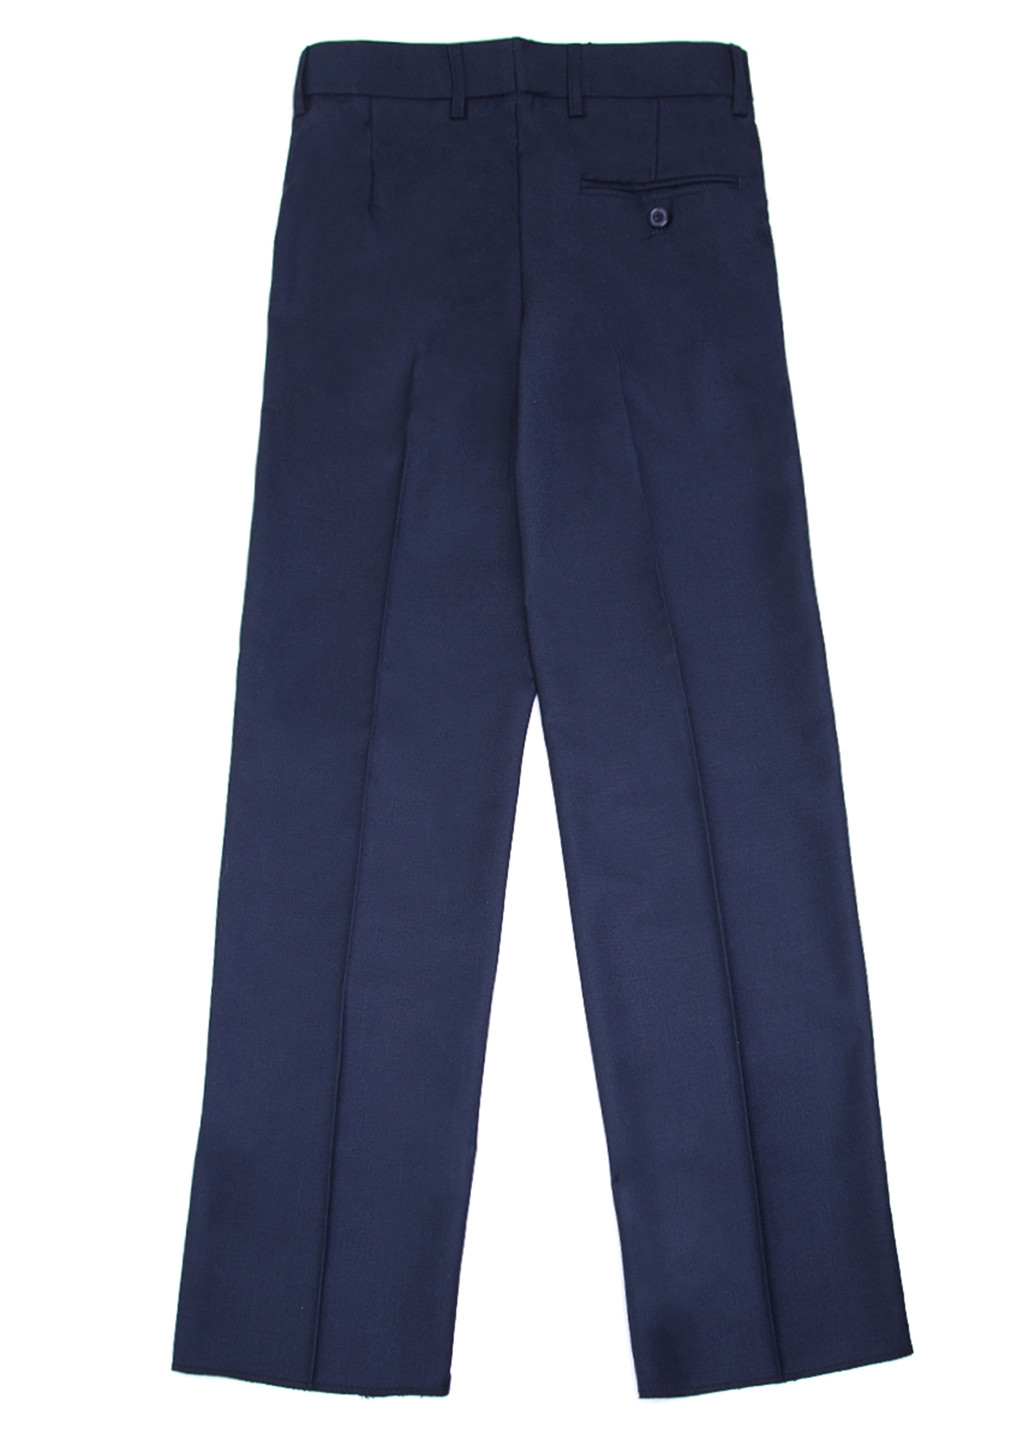 Темно-синий демисезонный костюм (брюки, пиджак) брючный Pinetti